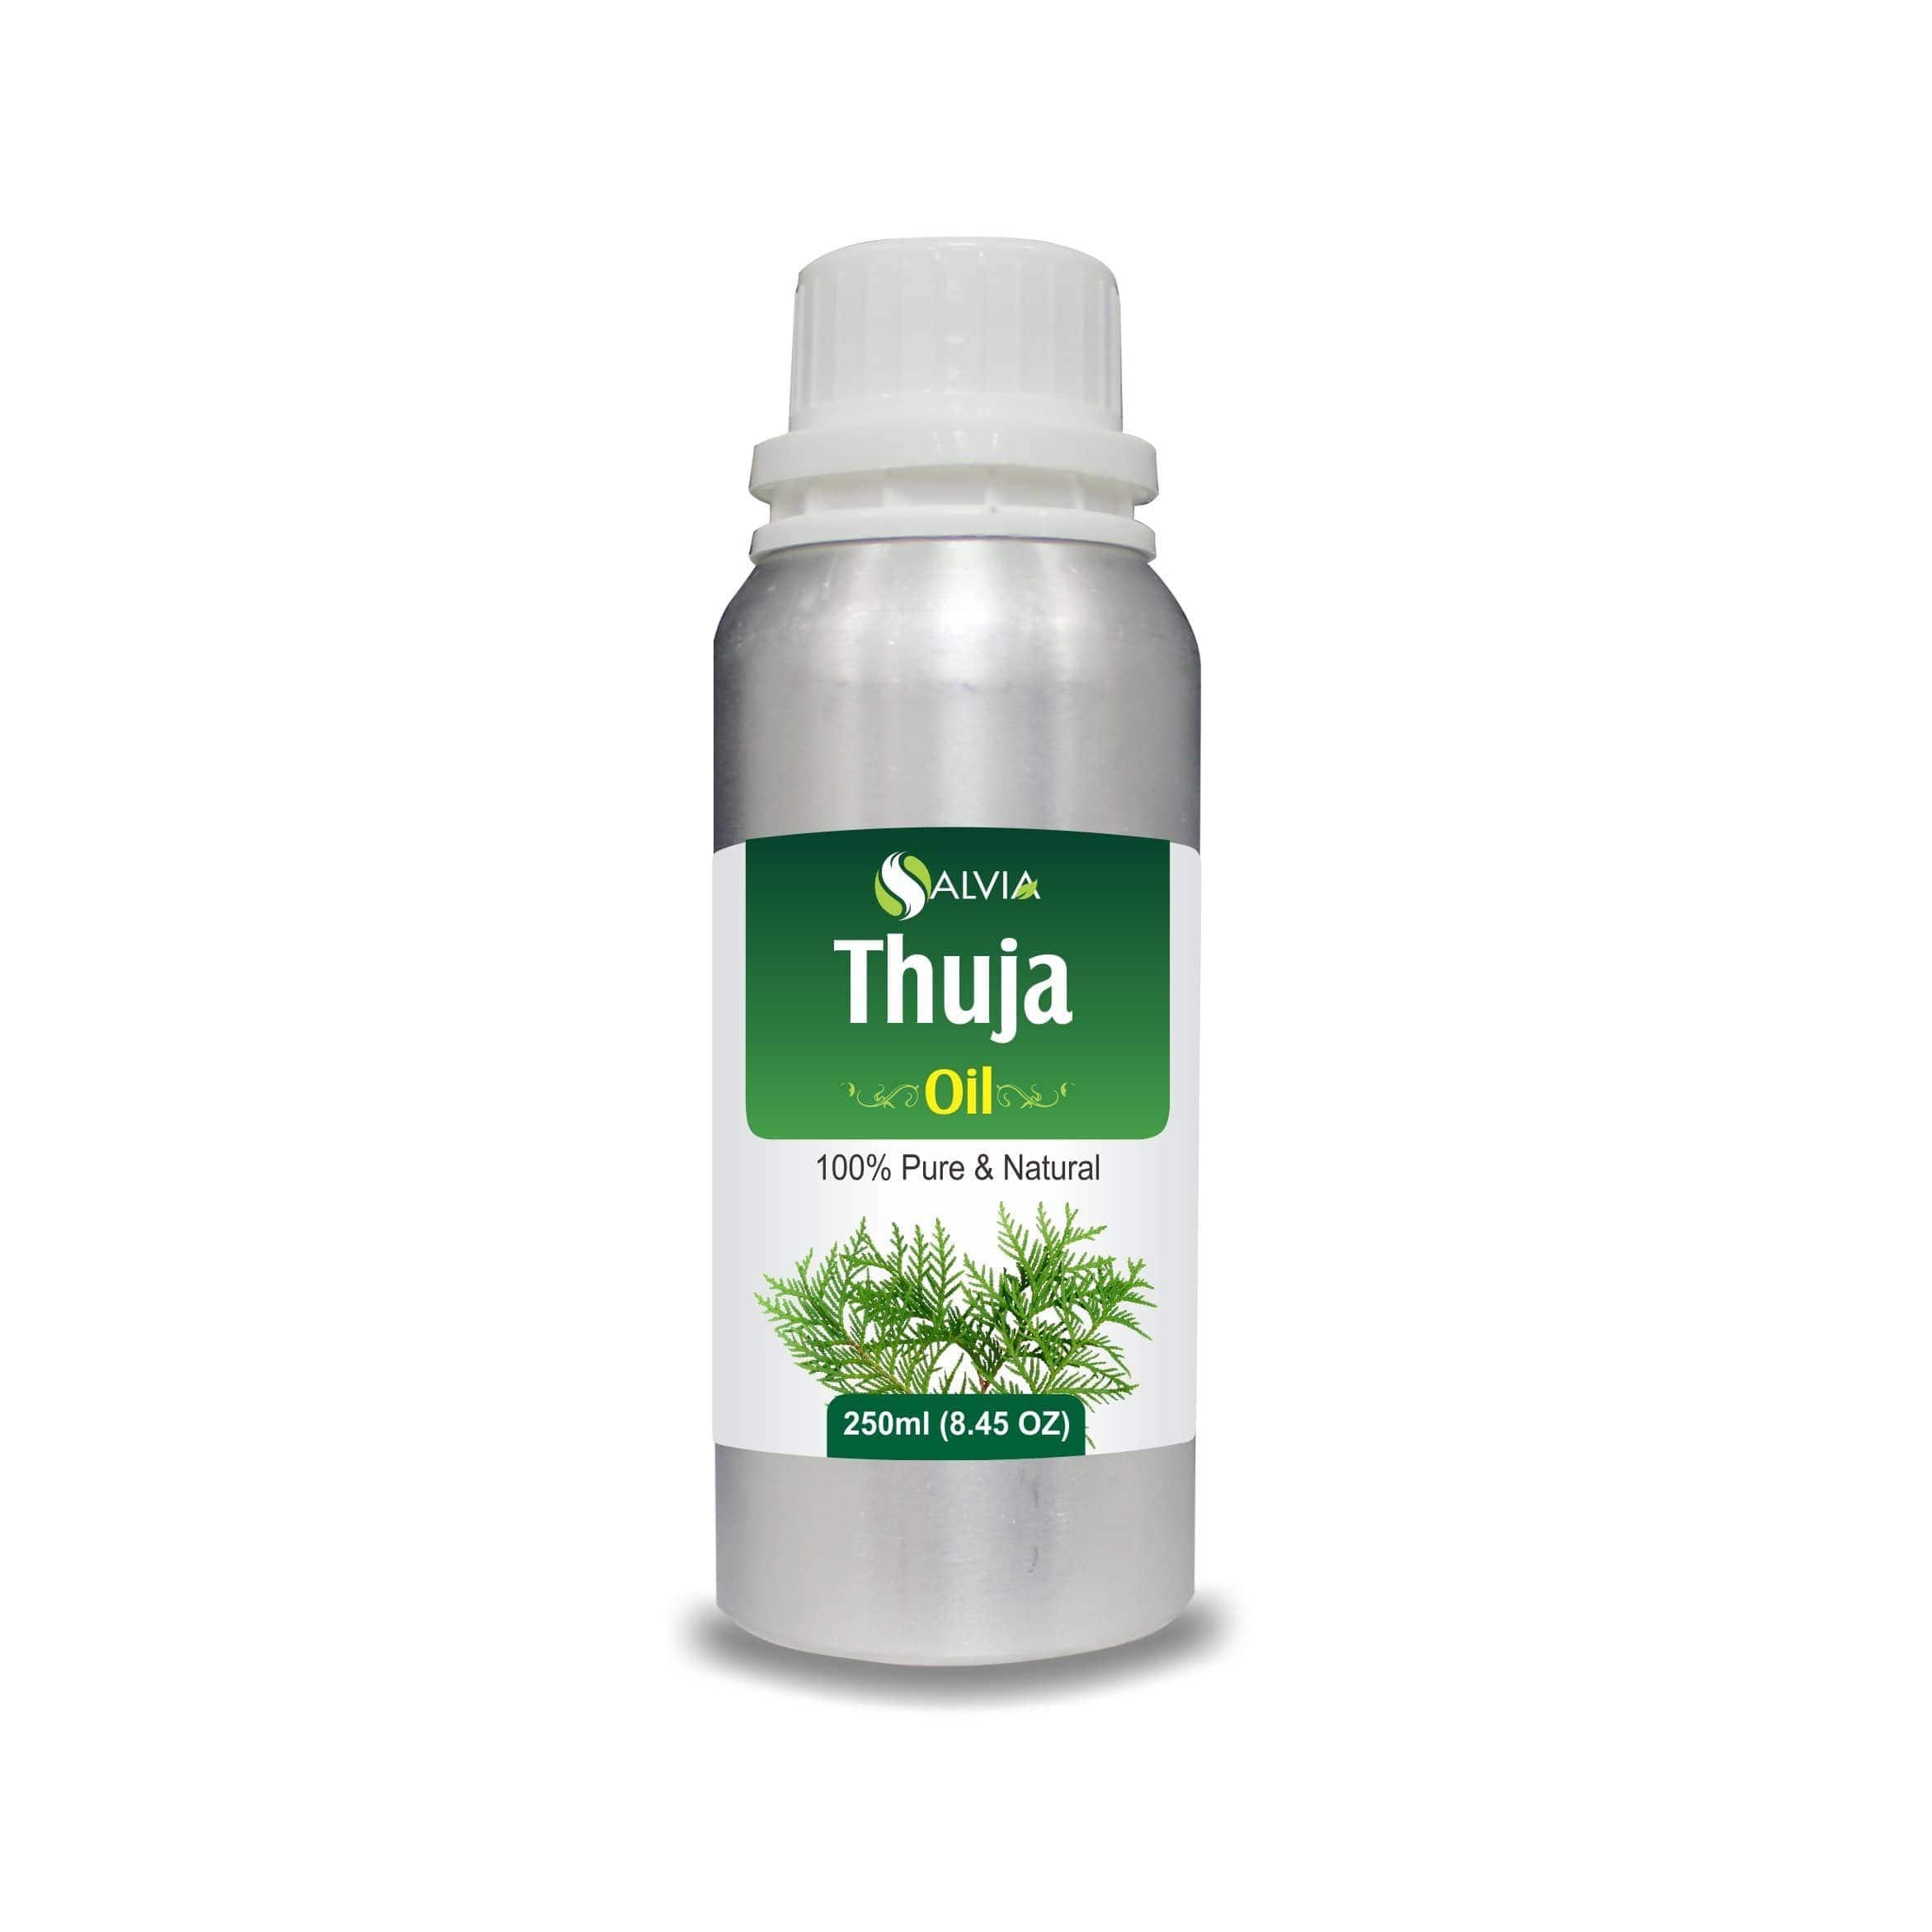 thuja oil for hair growth